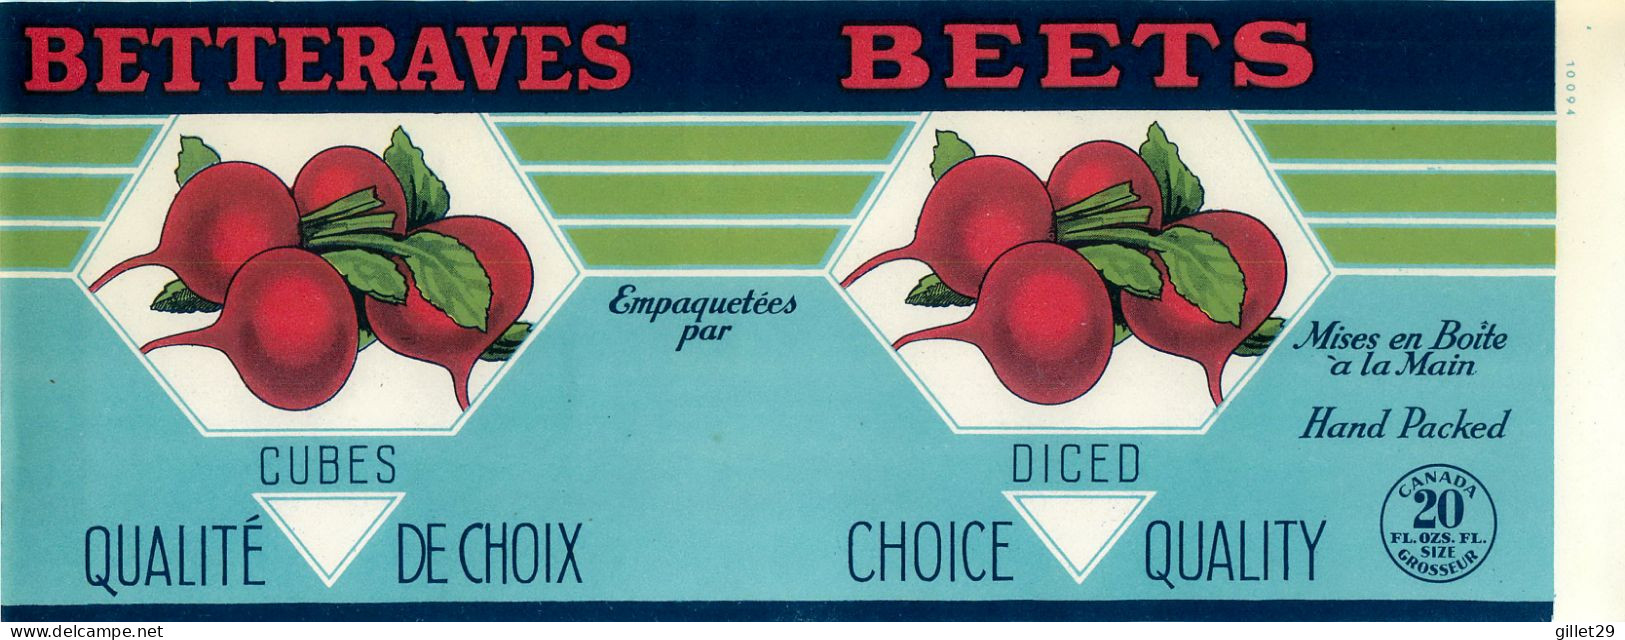 ÉTIQUETTES - BETTERAVES - BEETS - HAND PACKED - 20 OZS CANADA - DIMENSION 11 X 27 Cm - - Fruits Et Légumes